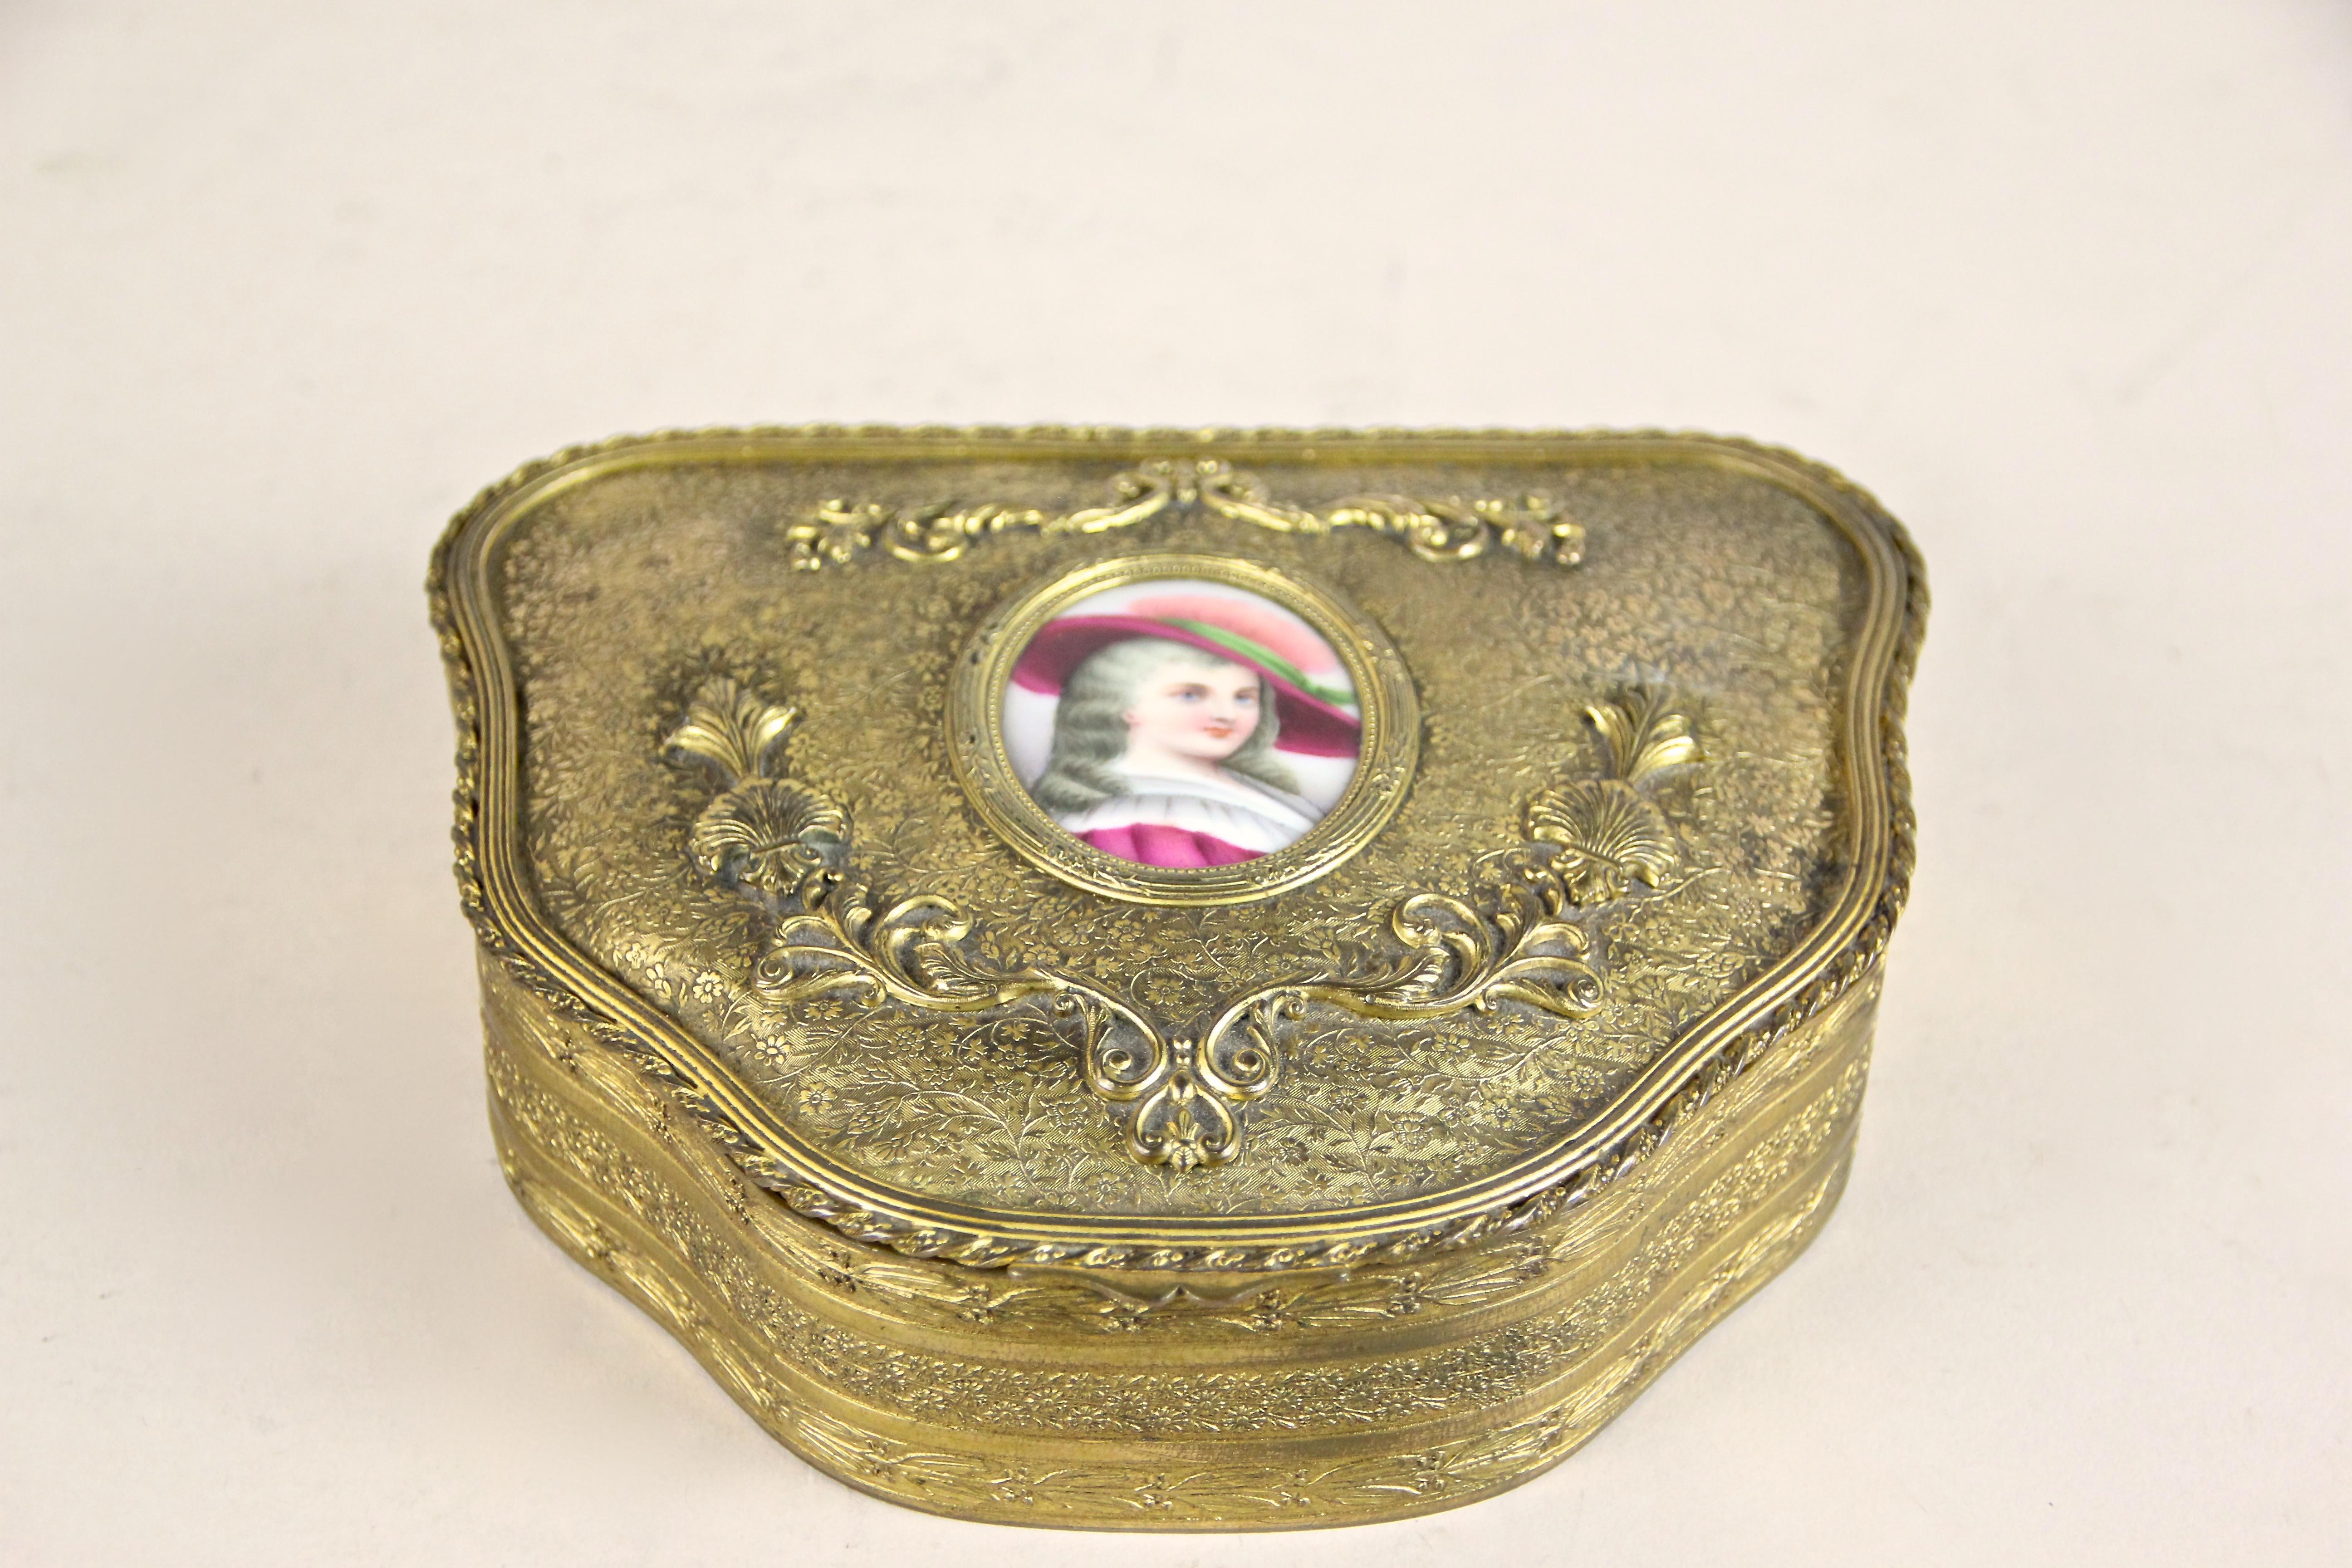 19th Century Firegilt Brass Jewelry Box with Porcelain Picture, Austria, circa 1860